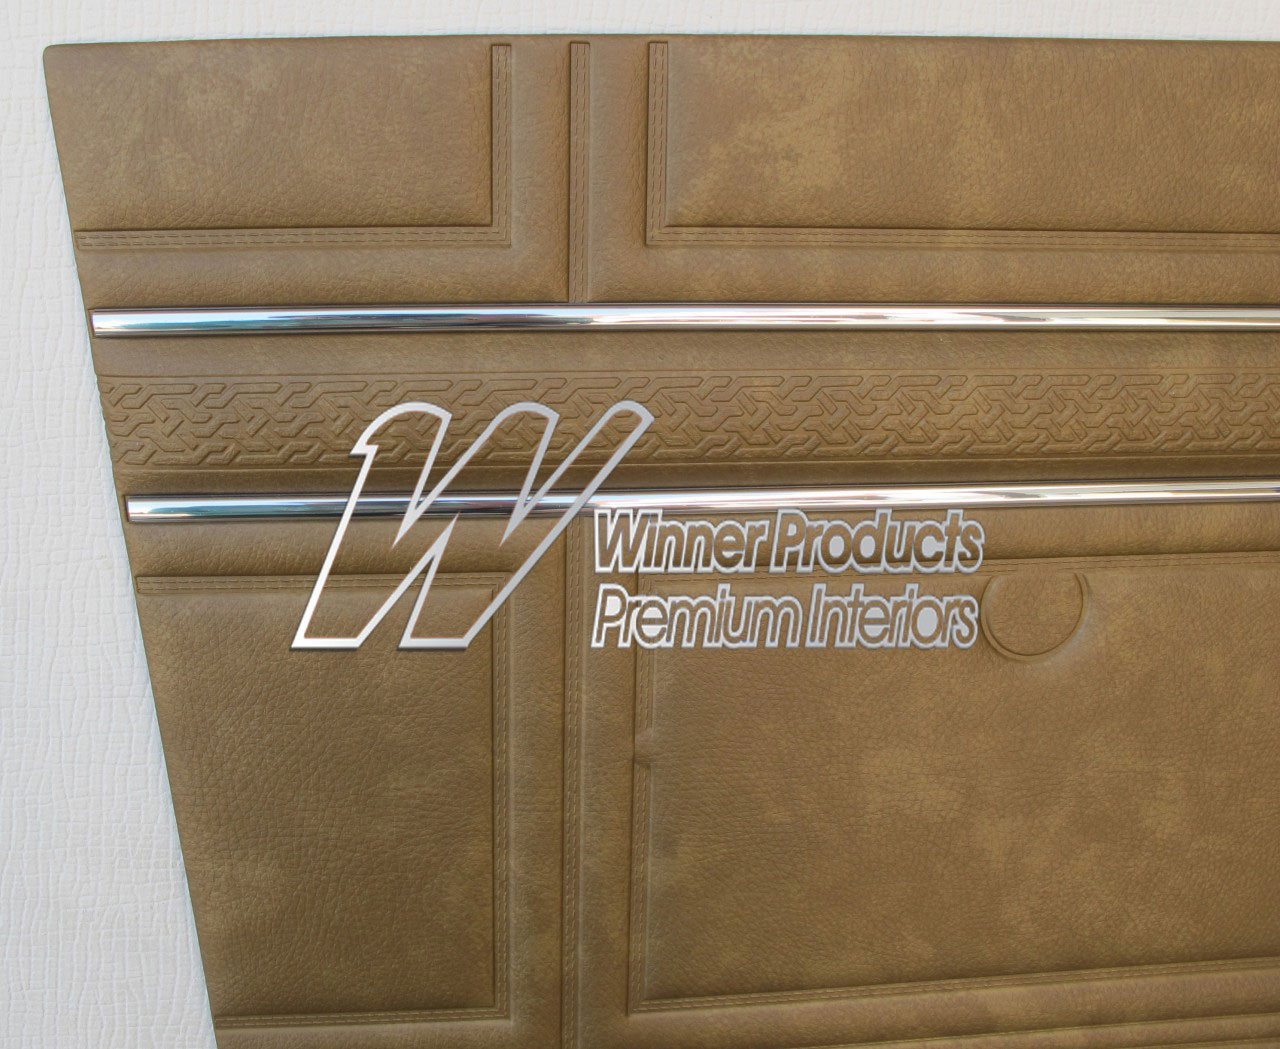 Holden Kingswood HT Kingswood Sedan 11G Antique Gold & Castillion Weave Door Trims (Image 4 of 4)